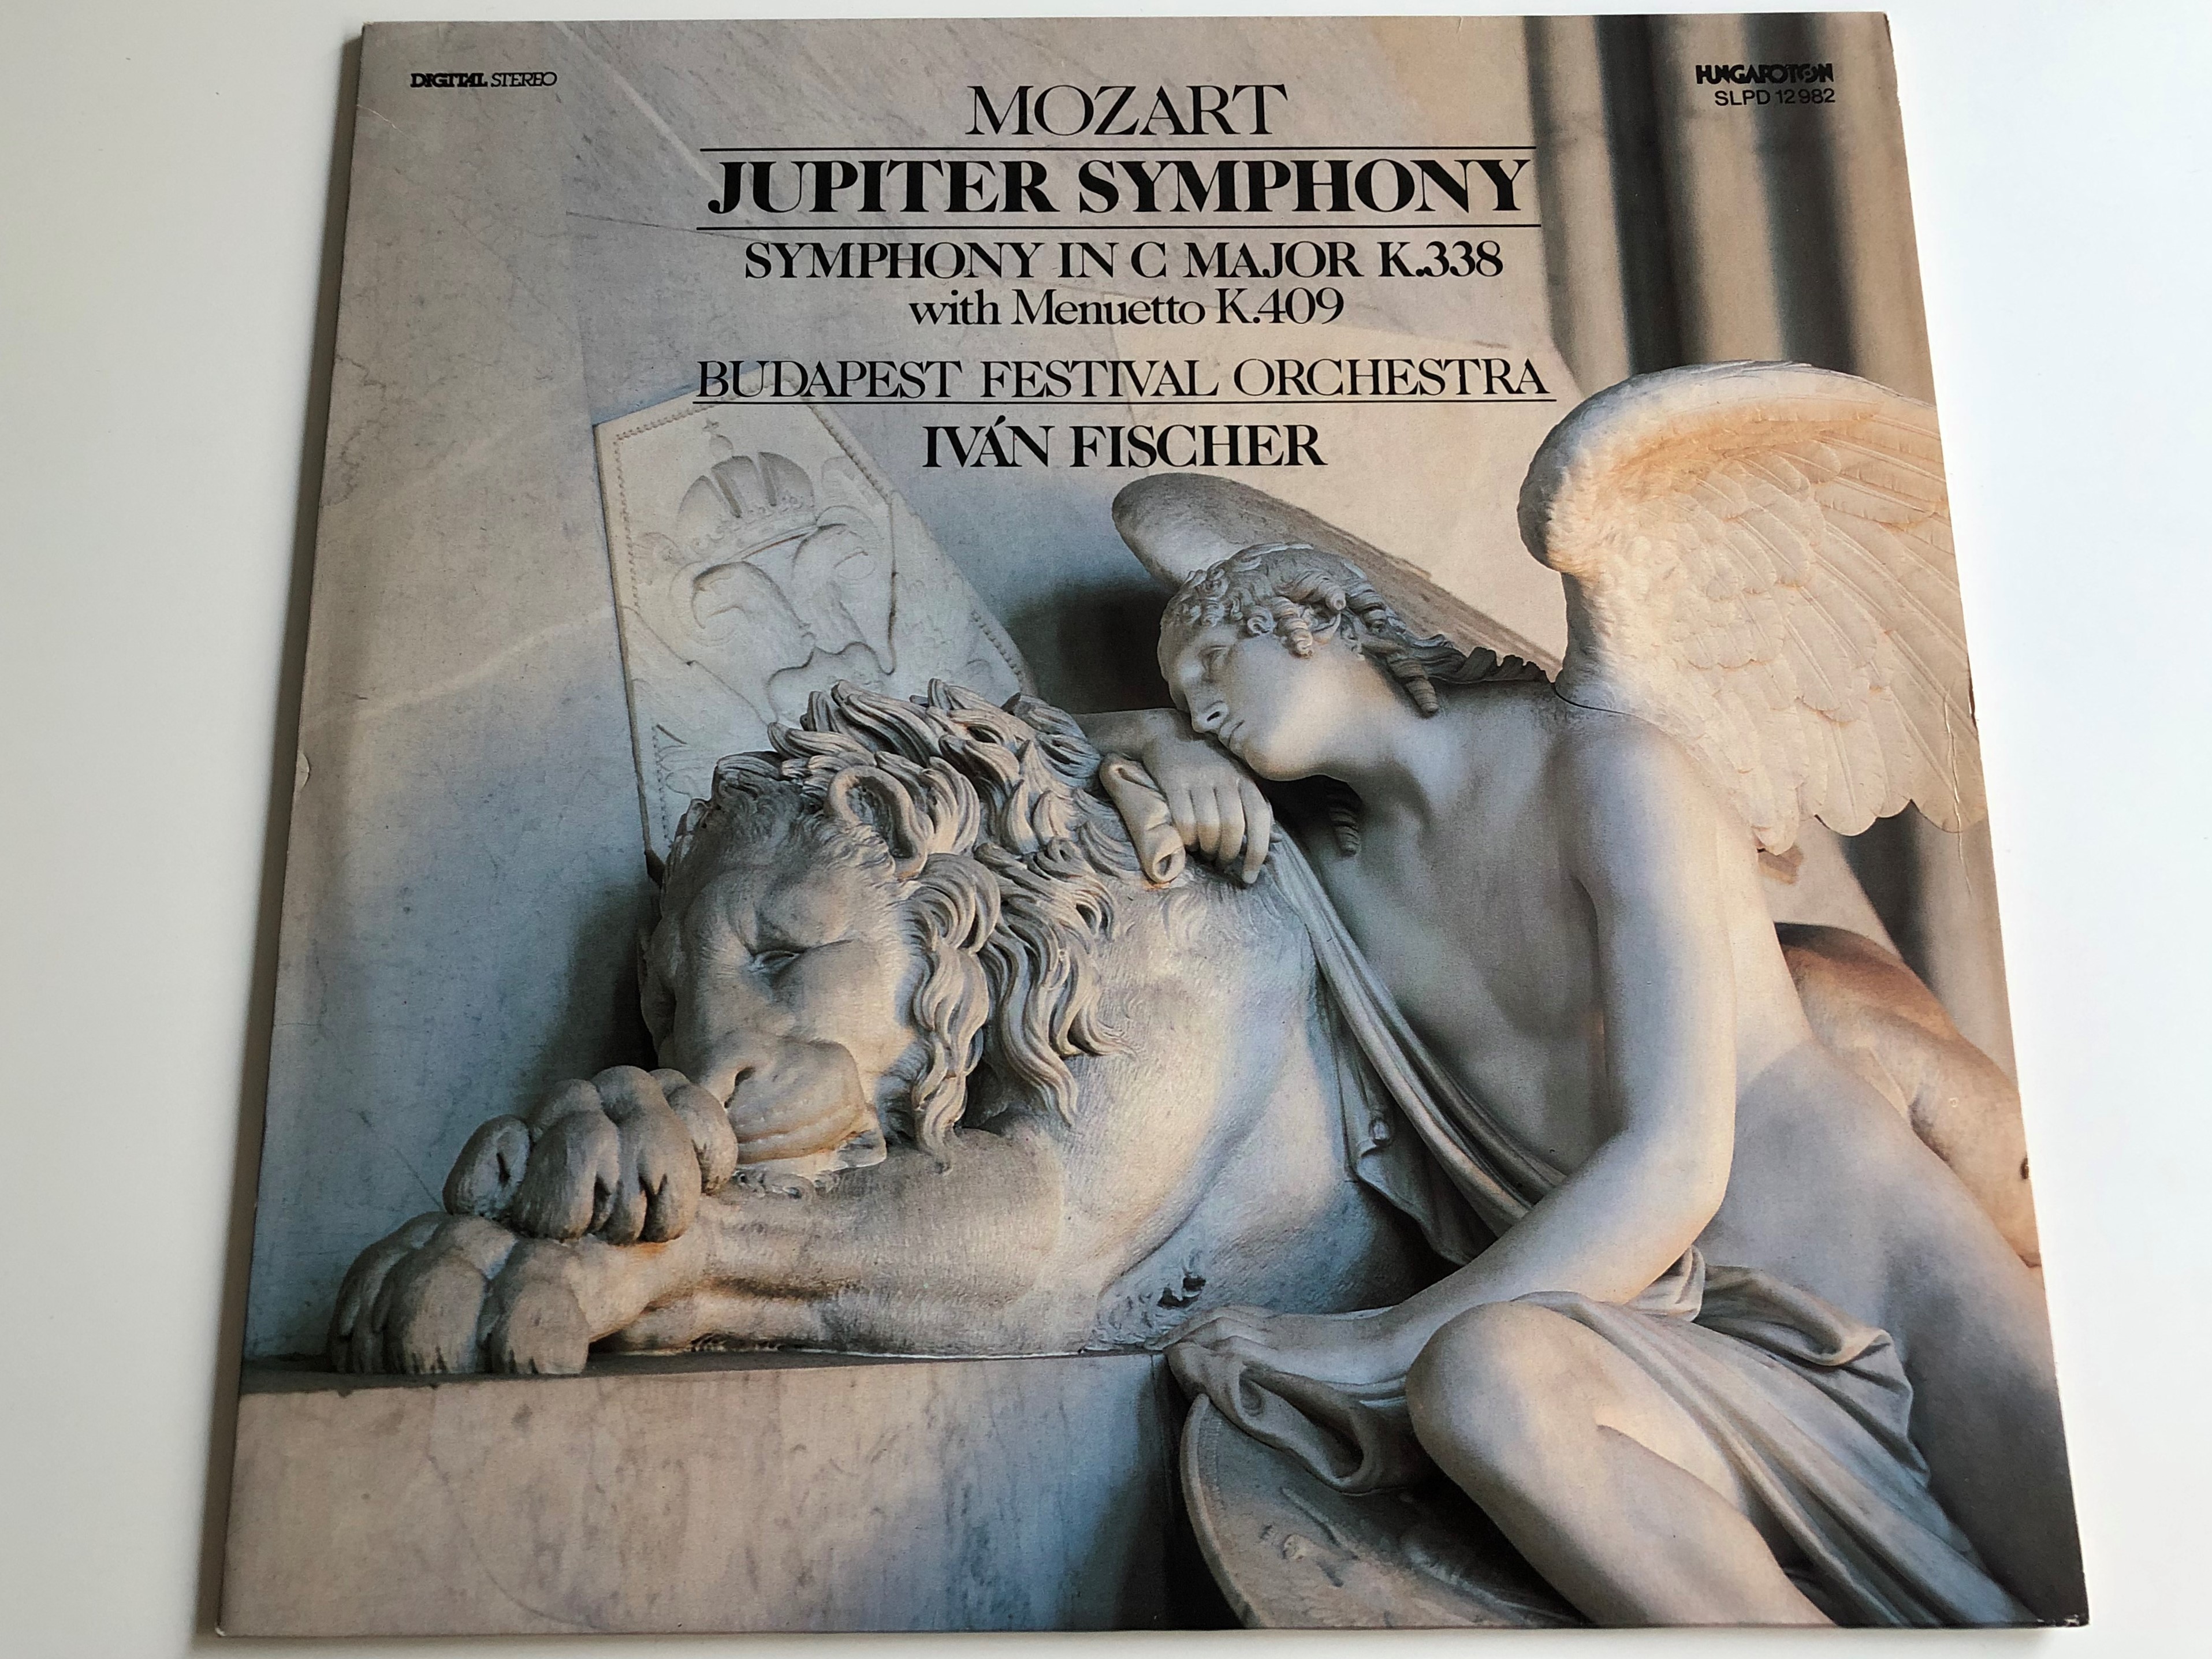 mozart-jupiter-symphony-symphony-in-c-major-k.338-with-menuetto-k.409-budapest-festival-orchestra-ivan-fischer-hungaroton-lp-digital-stereo-slpd-12982-1-.jpg